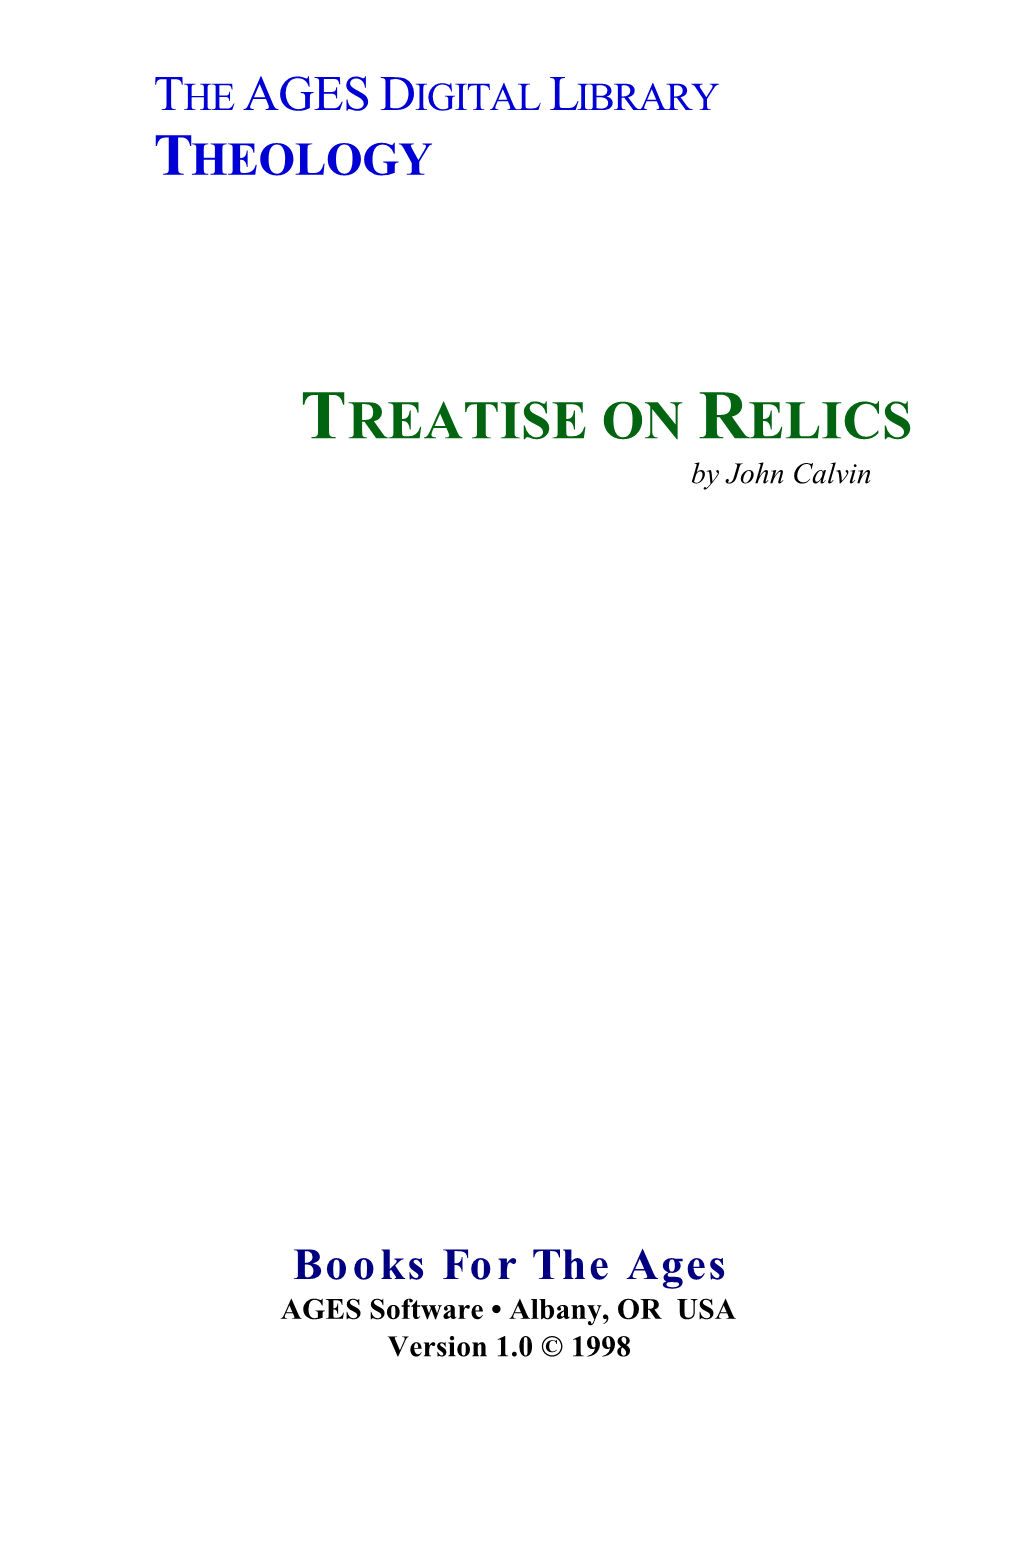 TREATISE on RELICS by John Calvin